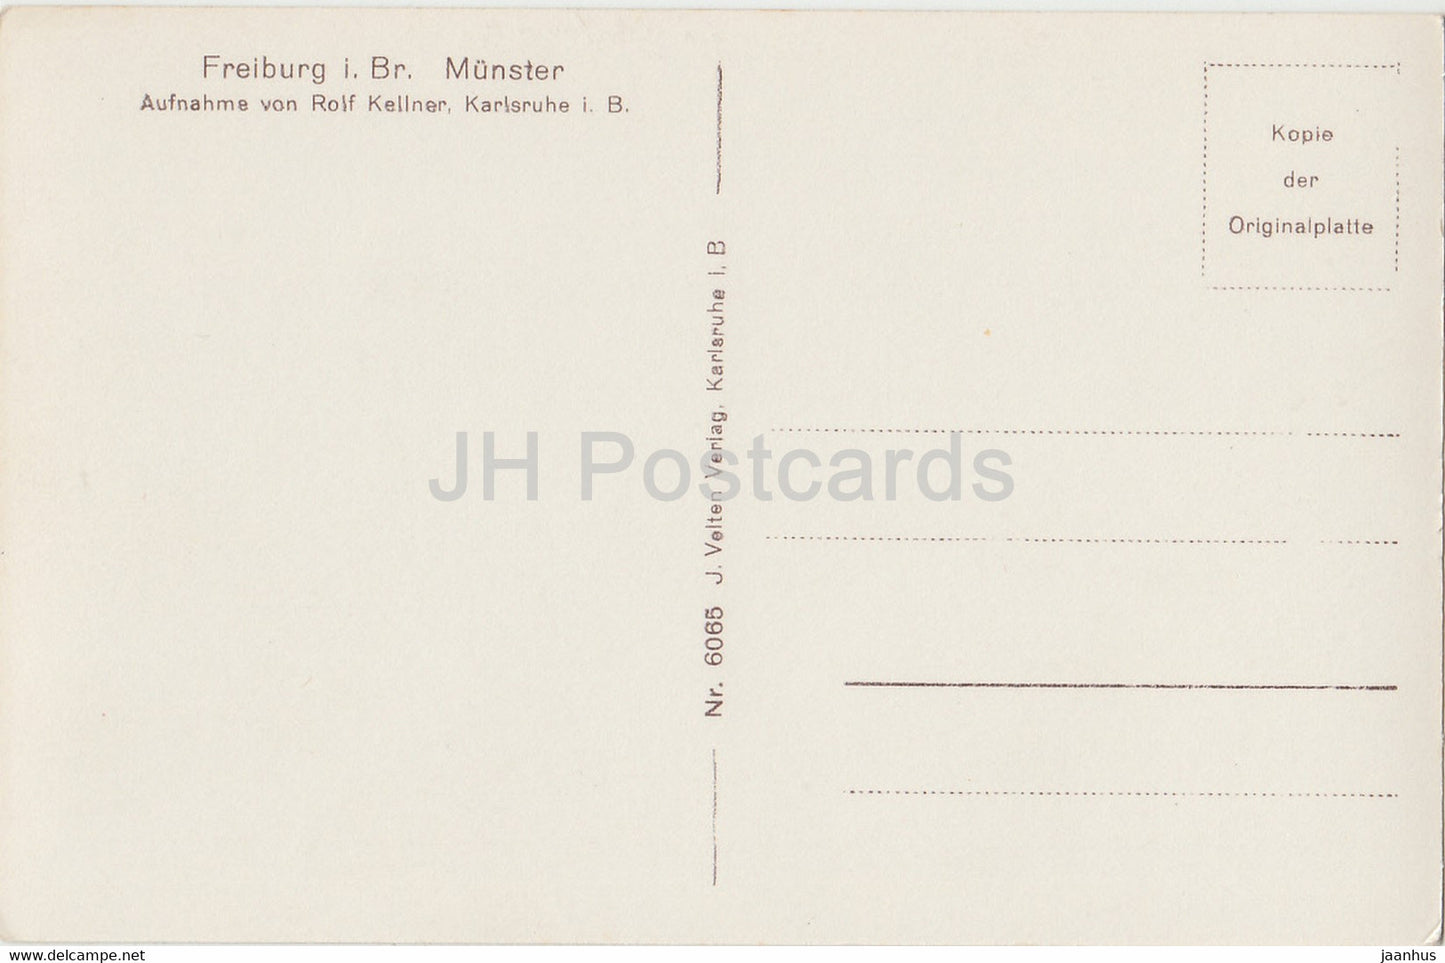 Freiburg i B - Munster - cathedral - old postcard - Germany - unused